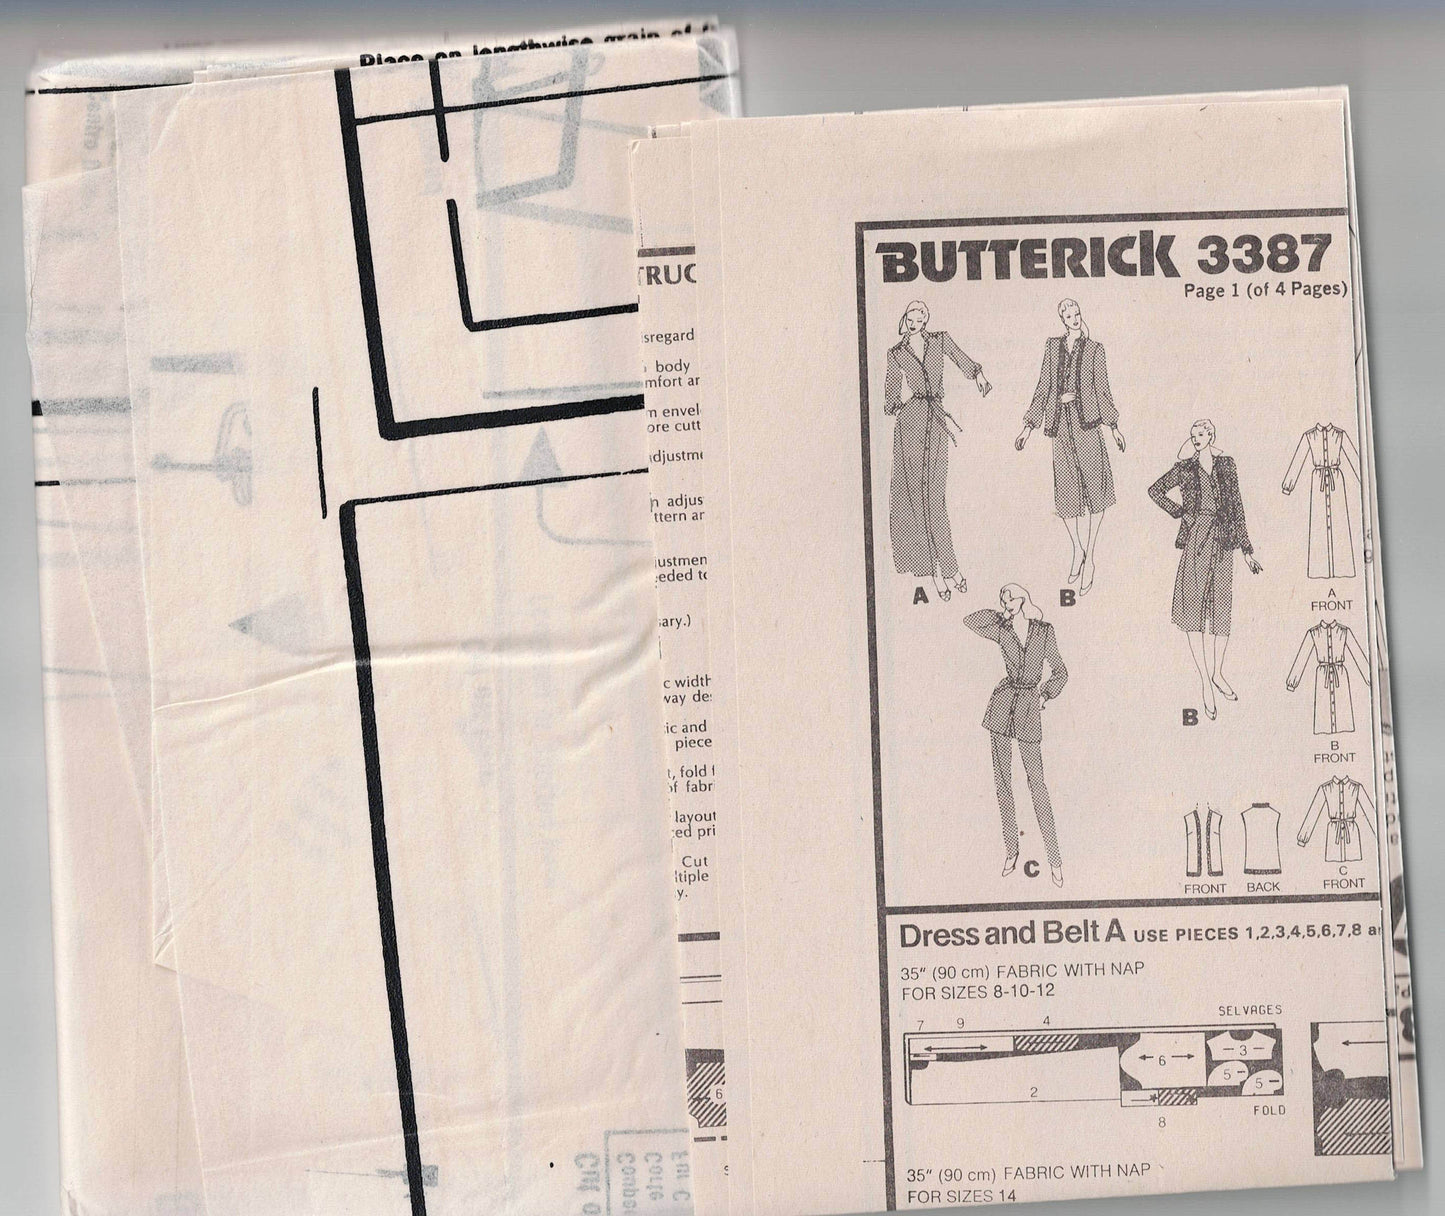 Butterick 3387 Womens Jacket Vest Dress & Belt 1980s Vintage Sewing Pattern Size 14 Bust 36 inches UNCUT Factory Folded